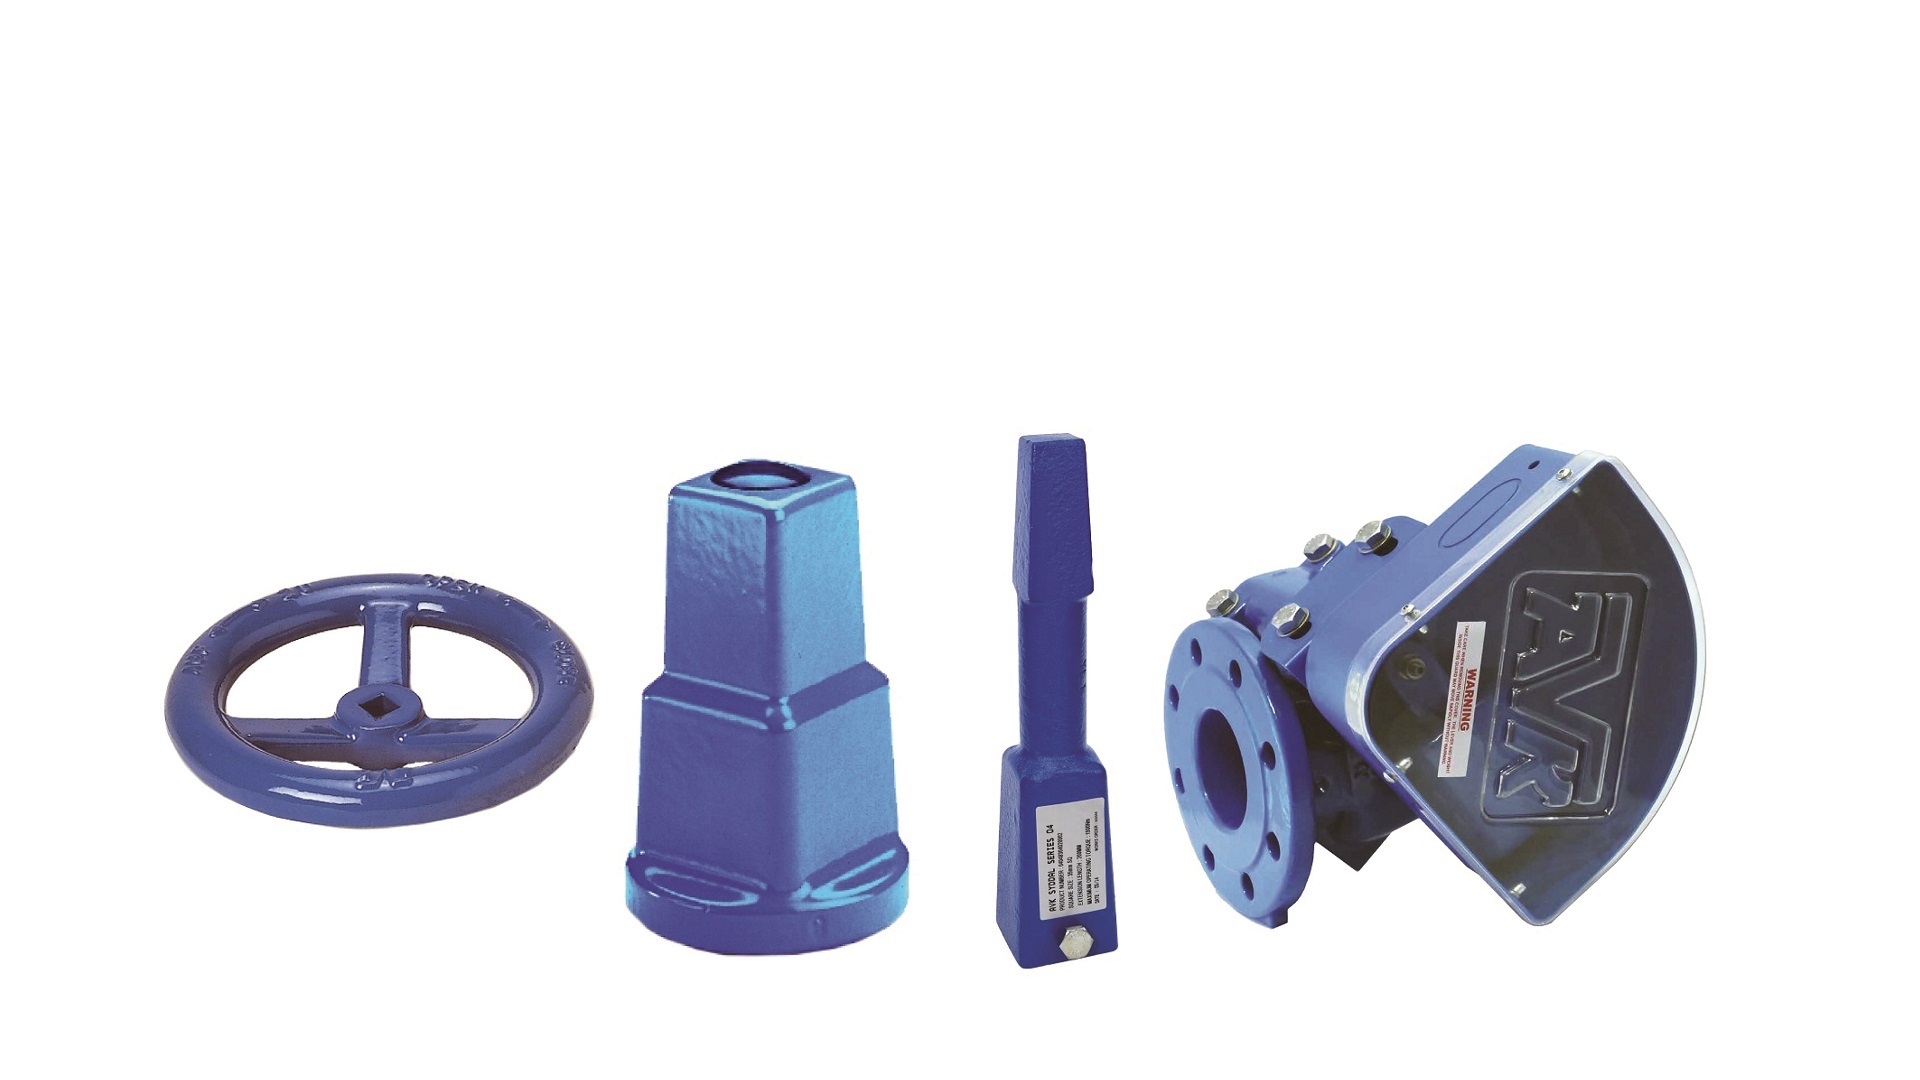 AVK valve accessories